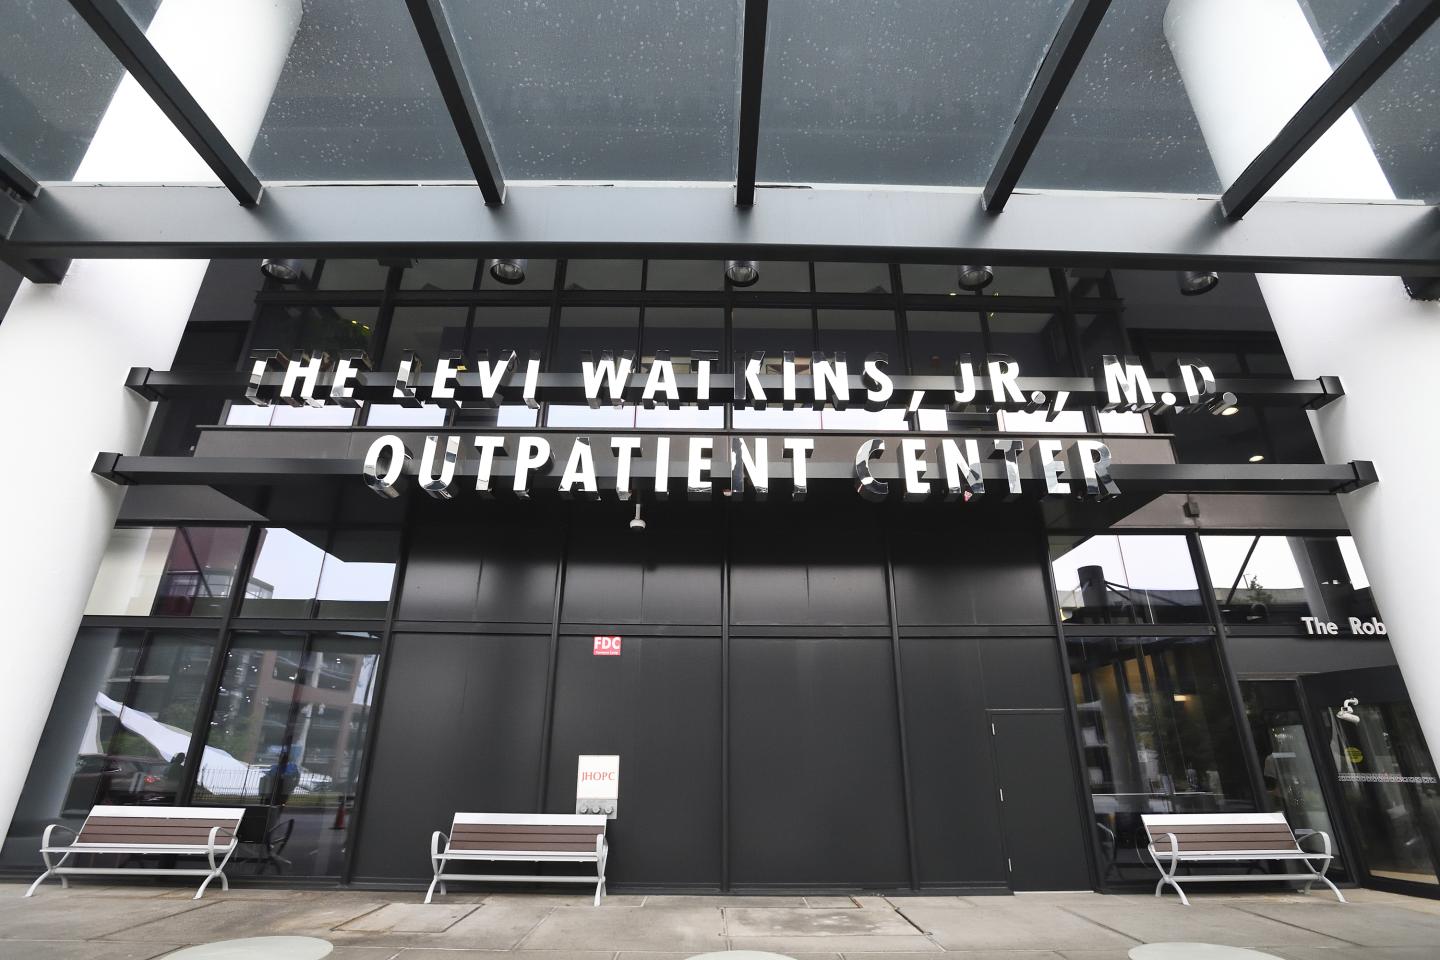 Exterior of the Levi Watkins Jr., M.D., Outpatient Center, formerly known as the Johns Hopkins Outpatient Center